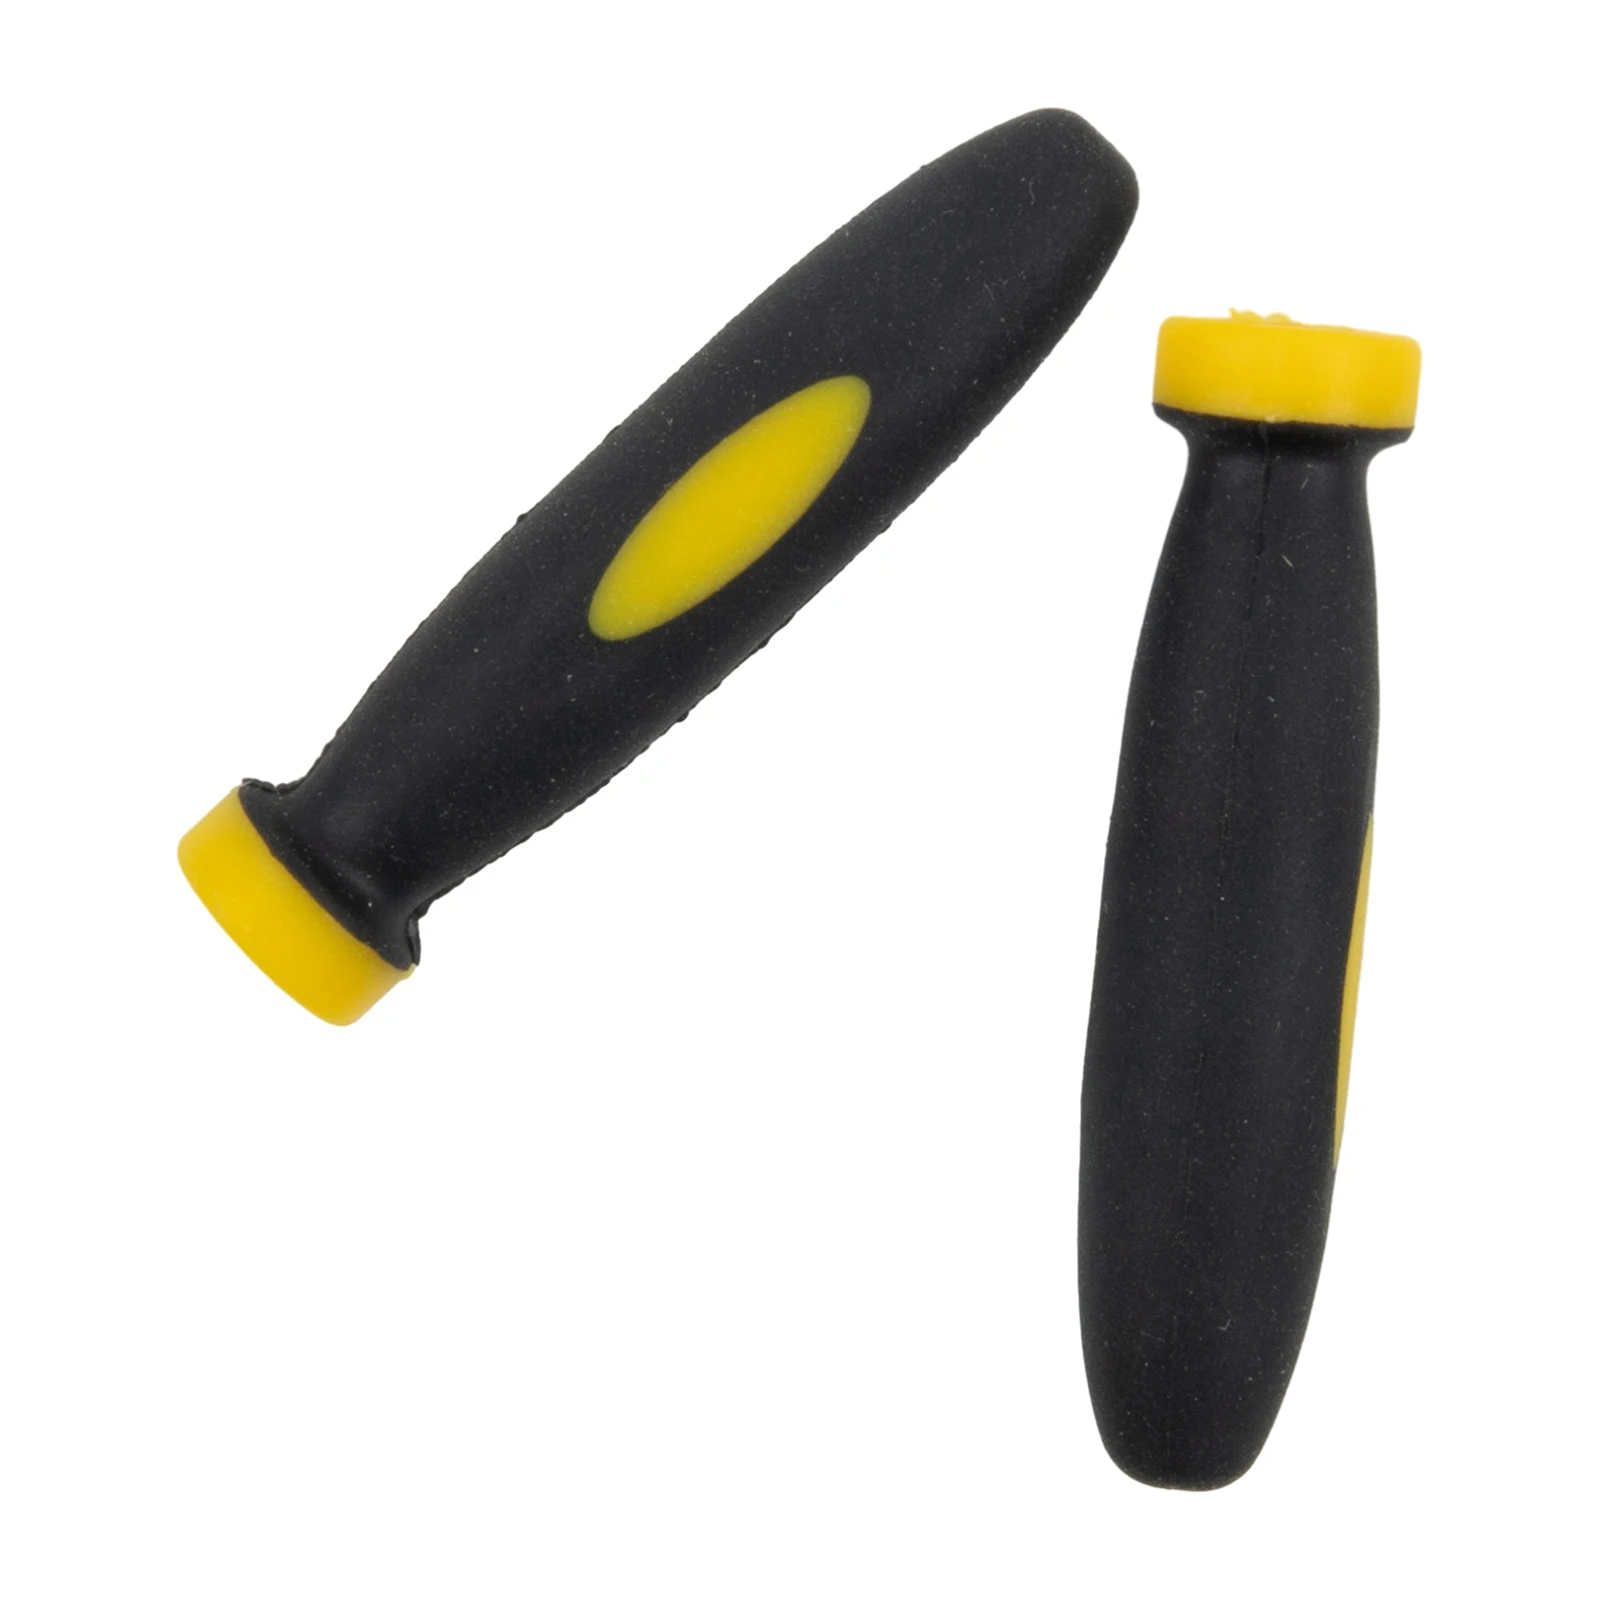 

10pcs Rubber File Handles 2.36x0.19inch 3mm Hole Diameter Black Yellow Workshop Equipment Hand Tools Files Handle Supplies